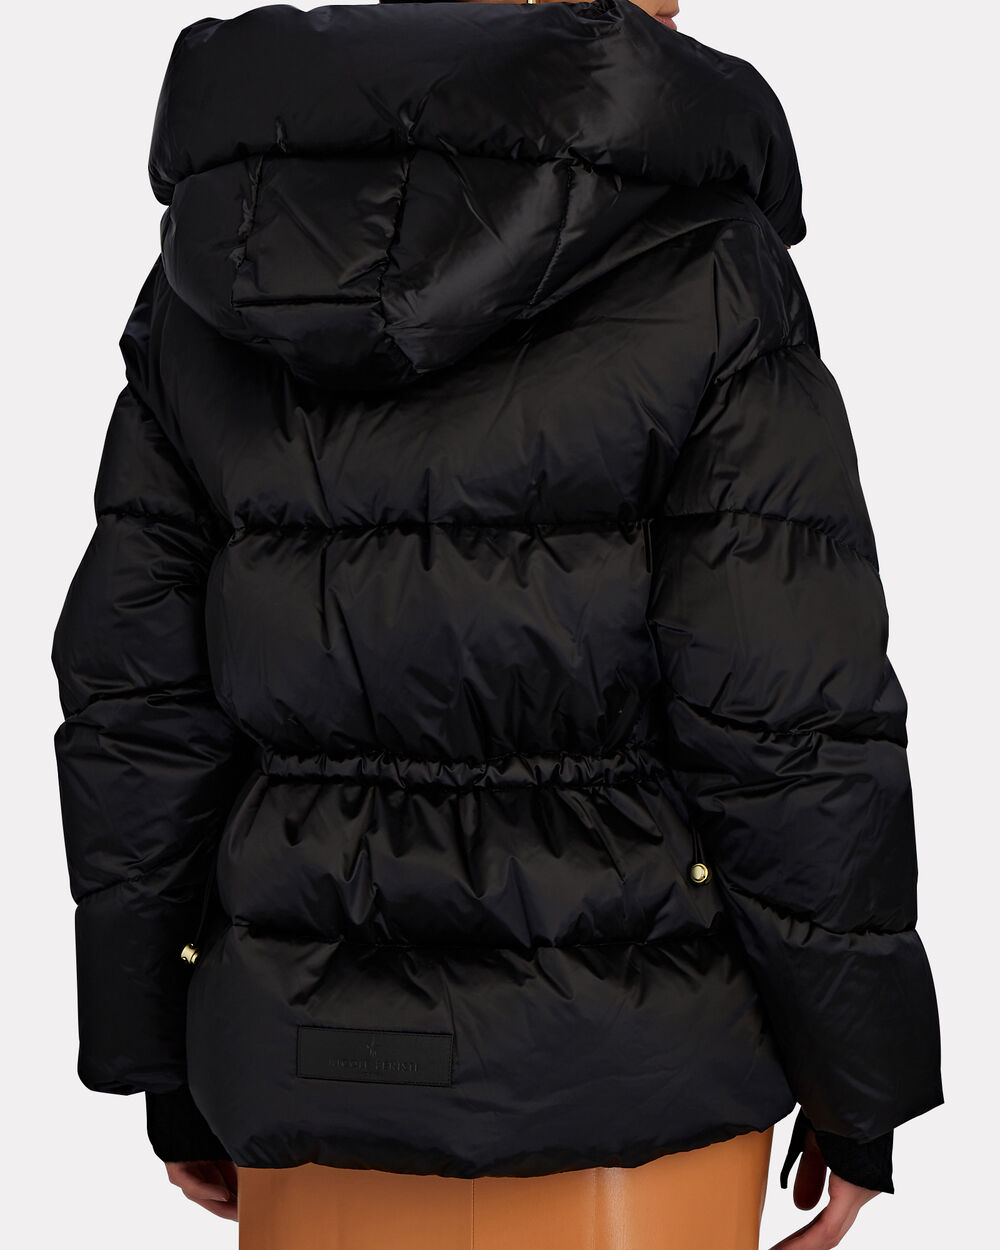 Mainetti 3329, 17 Heavy Duty Black Plastic, Jacket Coat Outerwear